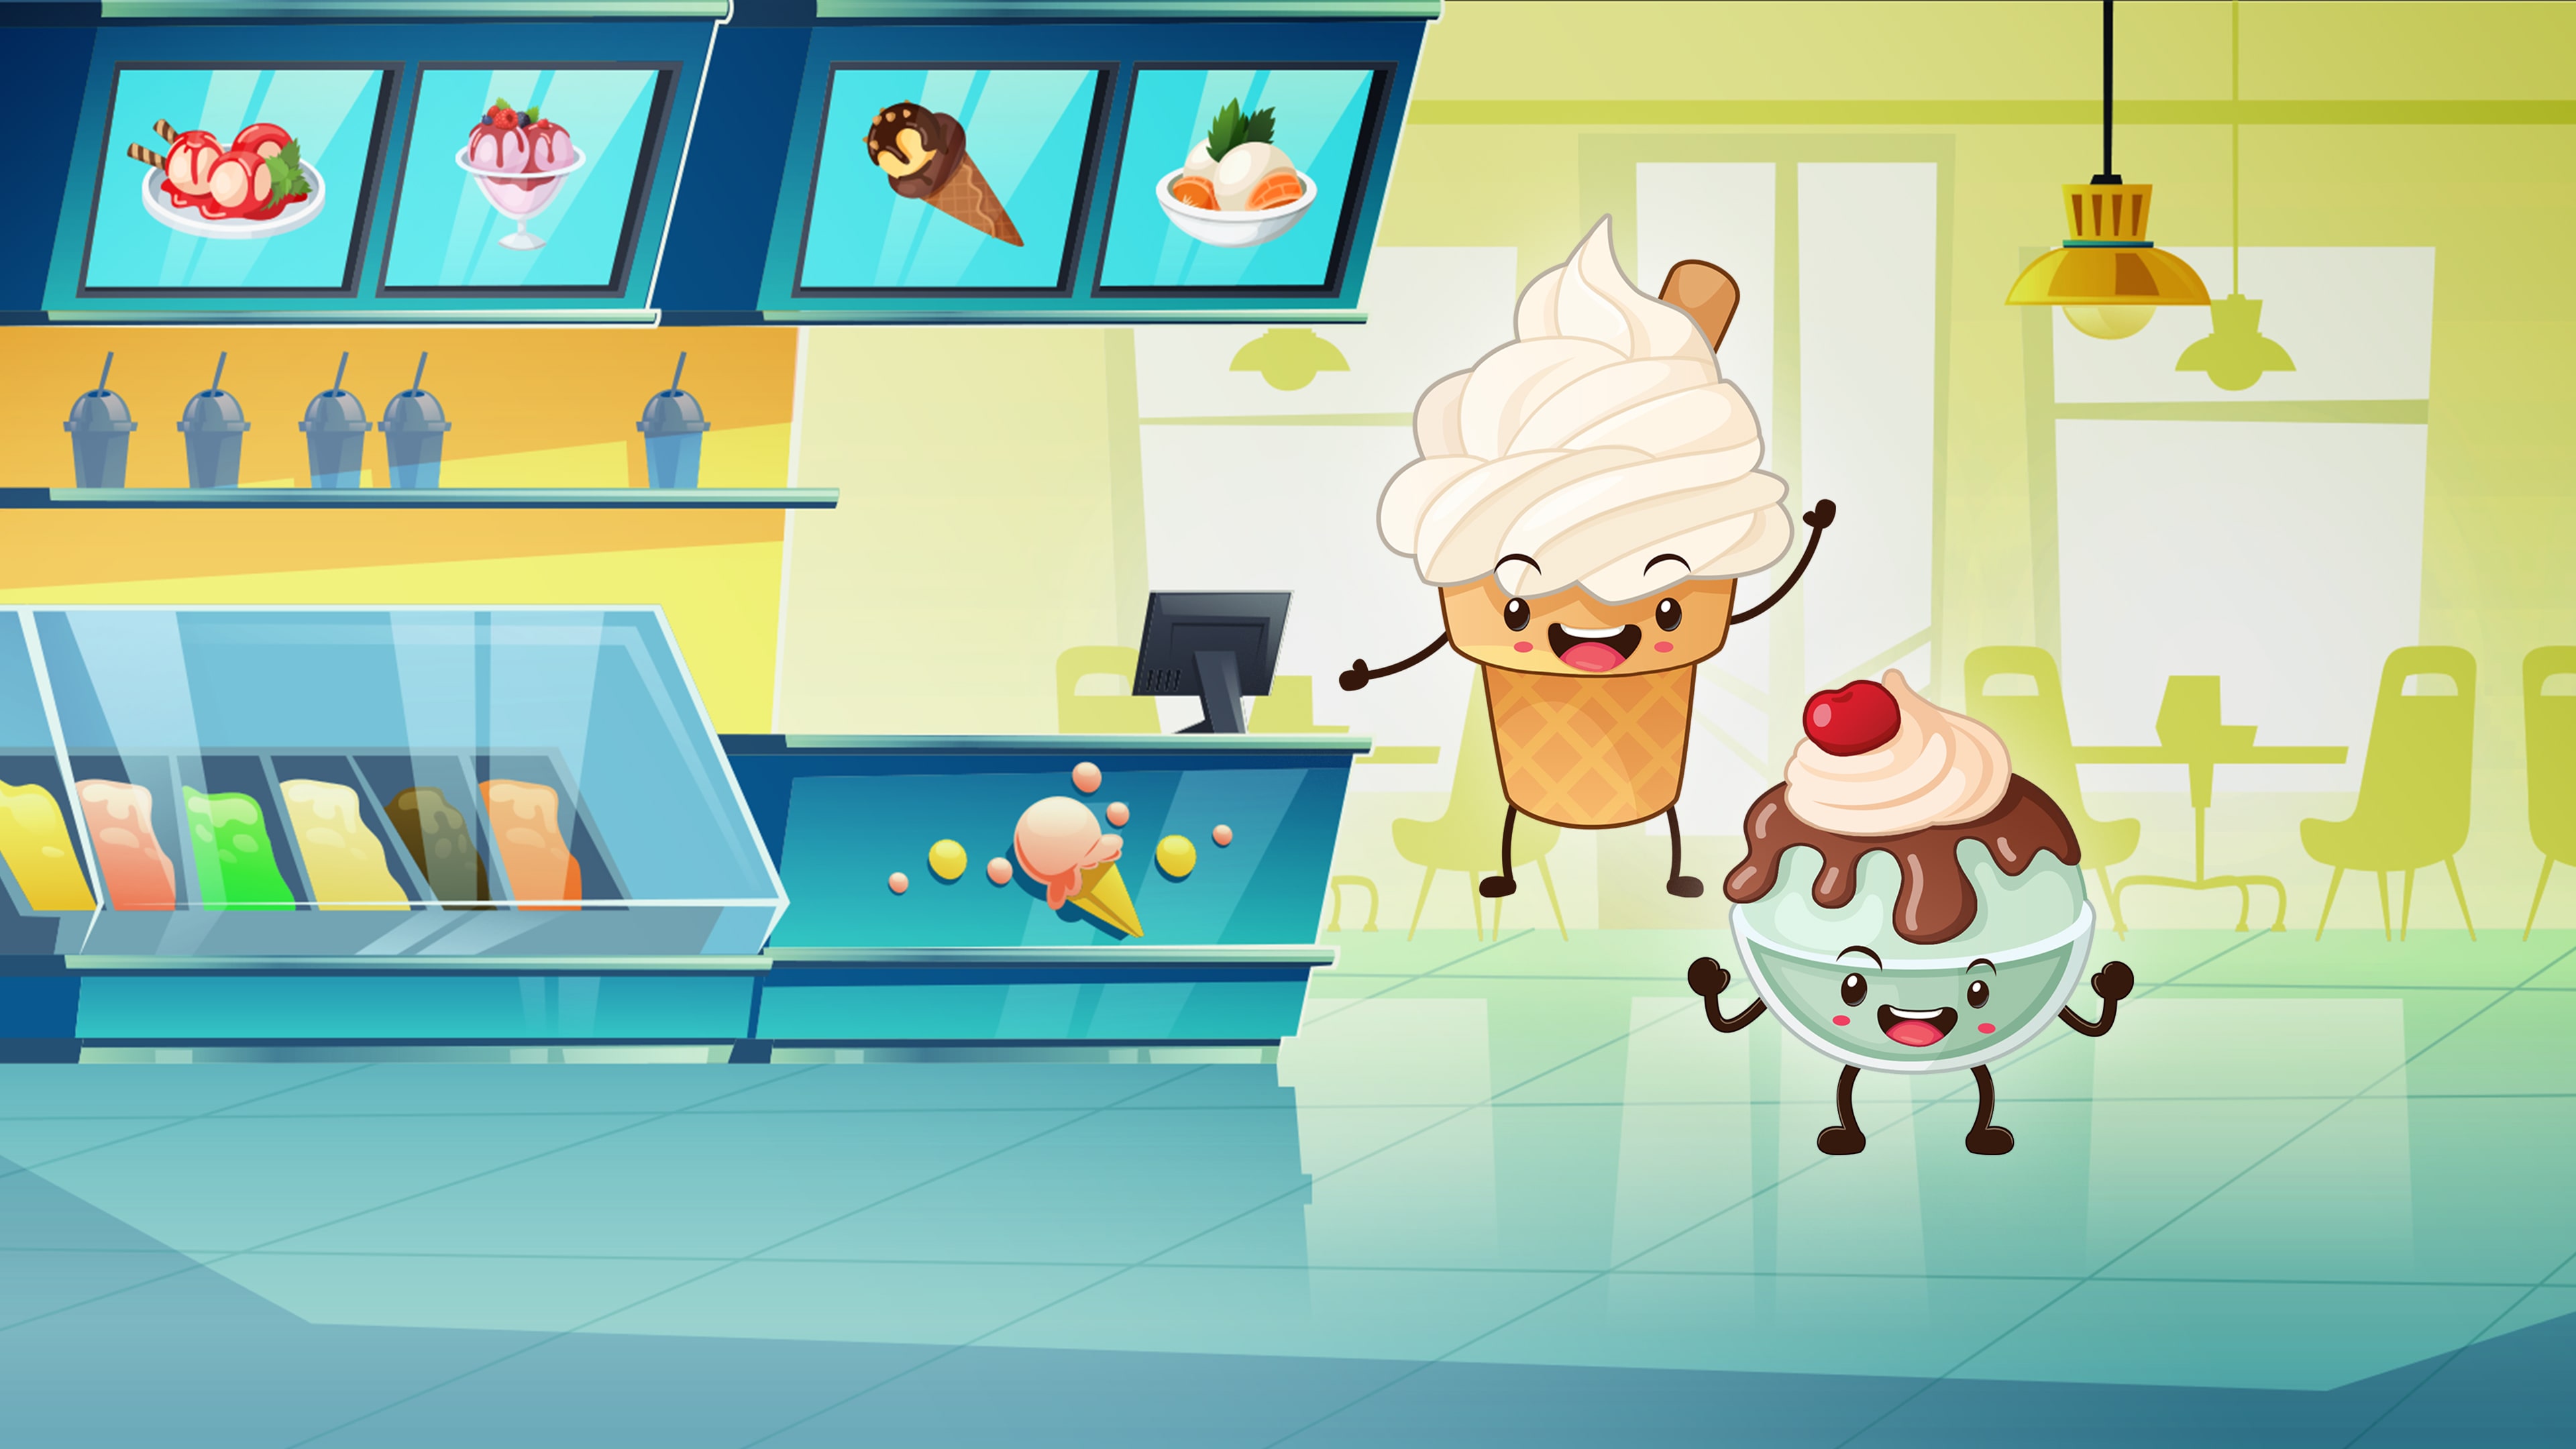 Ice Cream Break Head to Head - Avatar Full Game Bundle